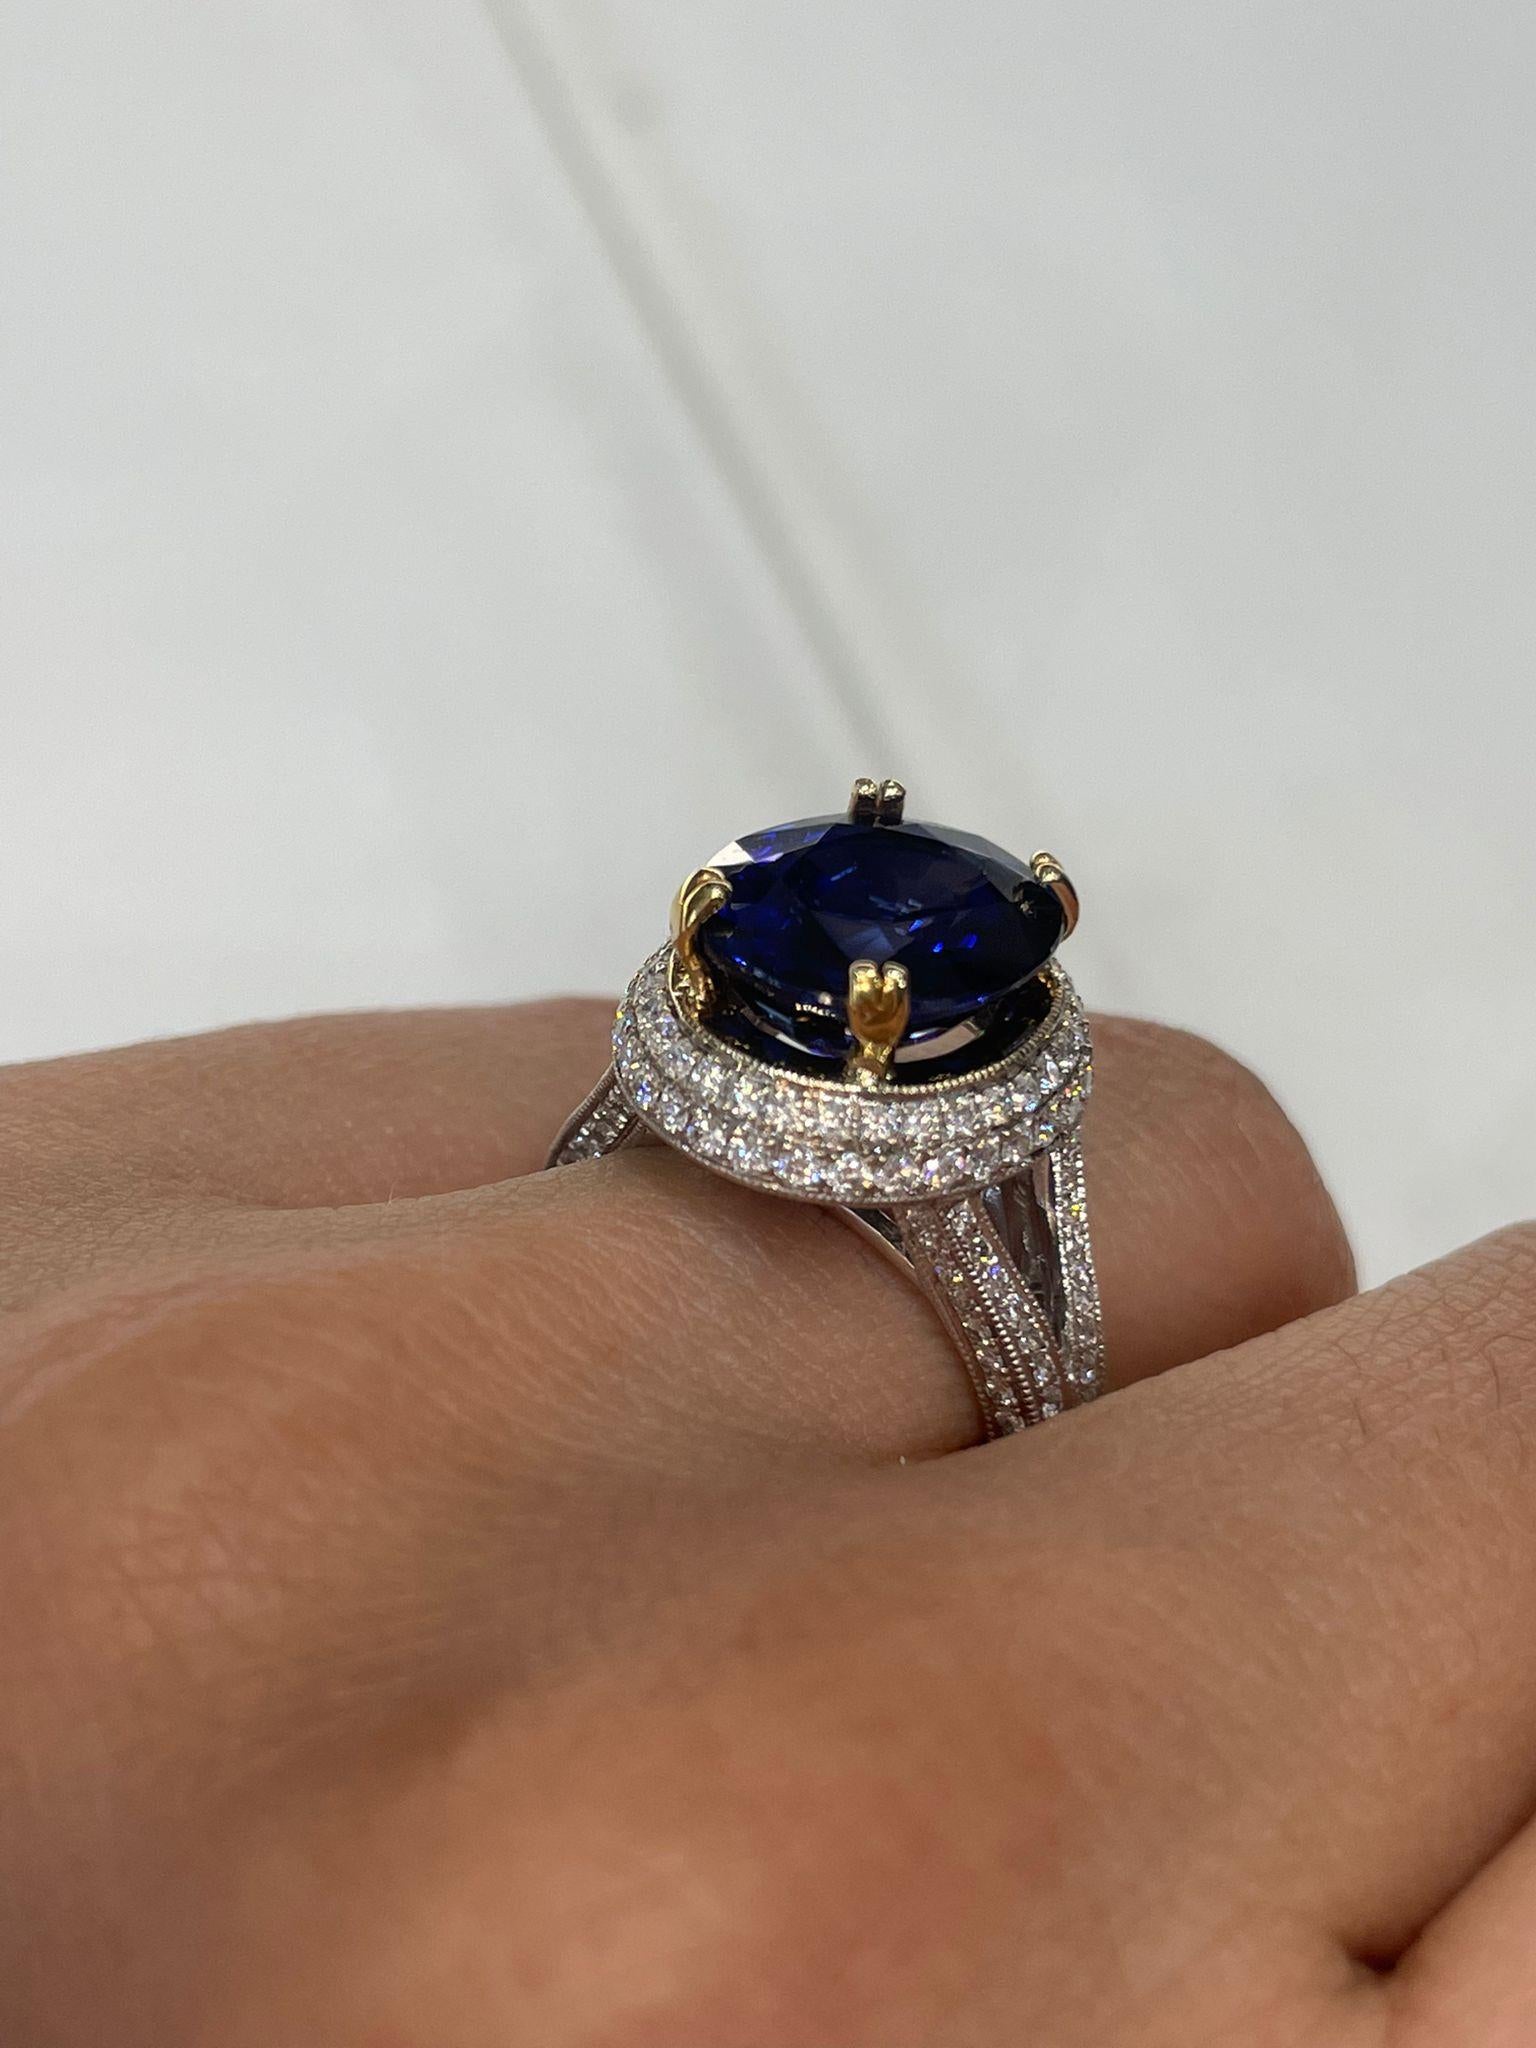 10 carat blue sapphire